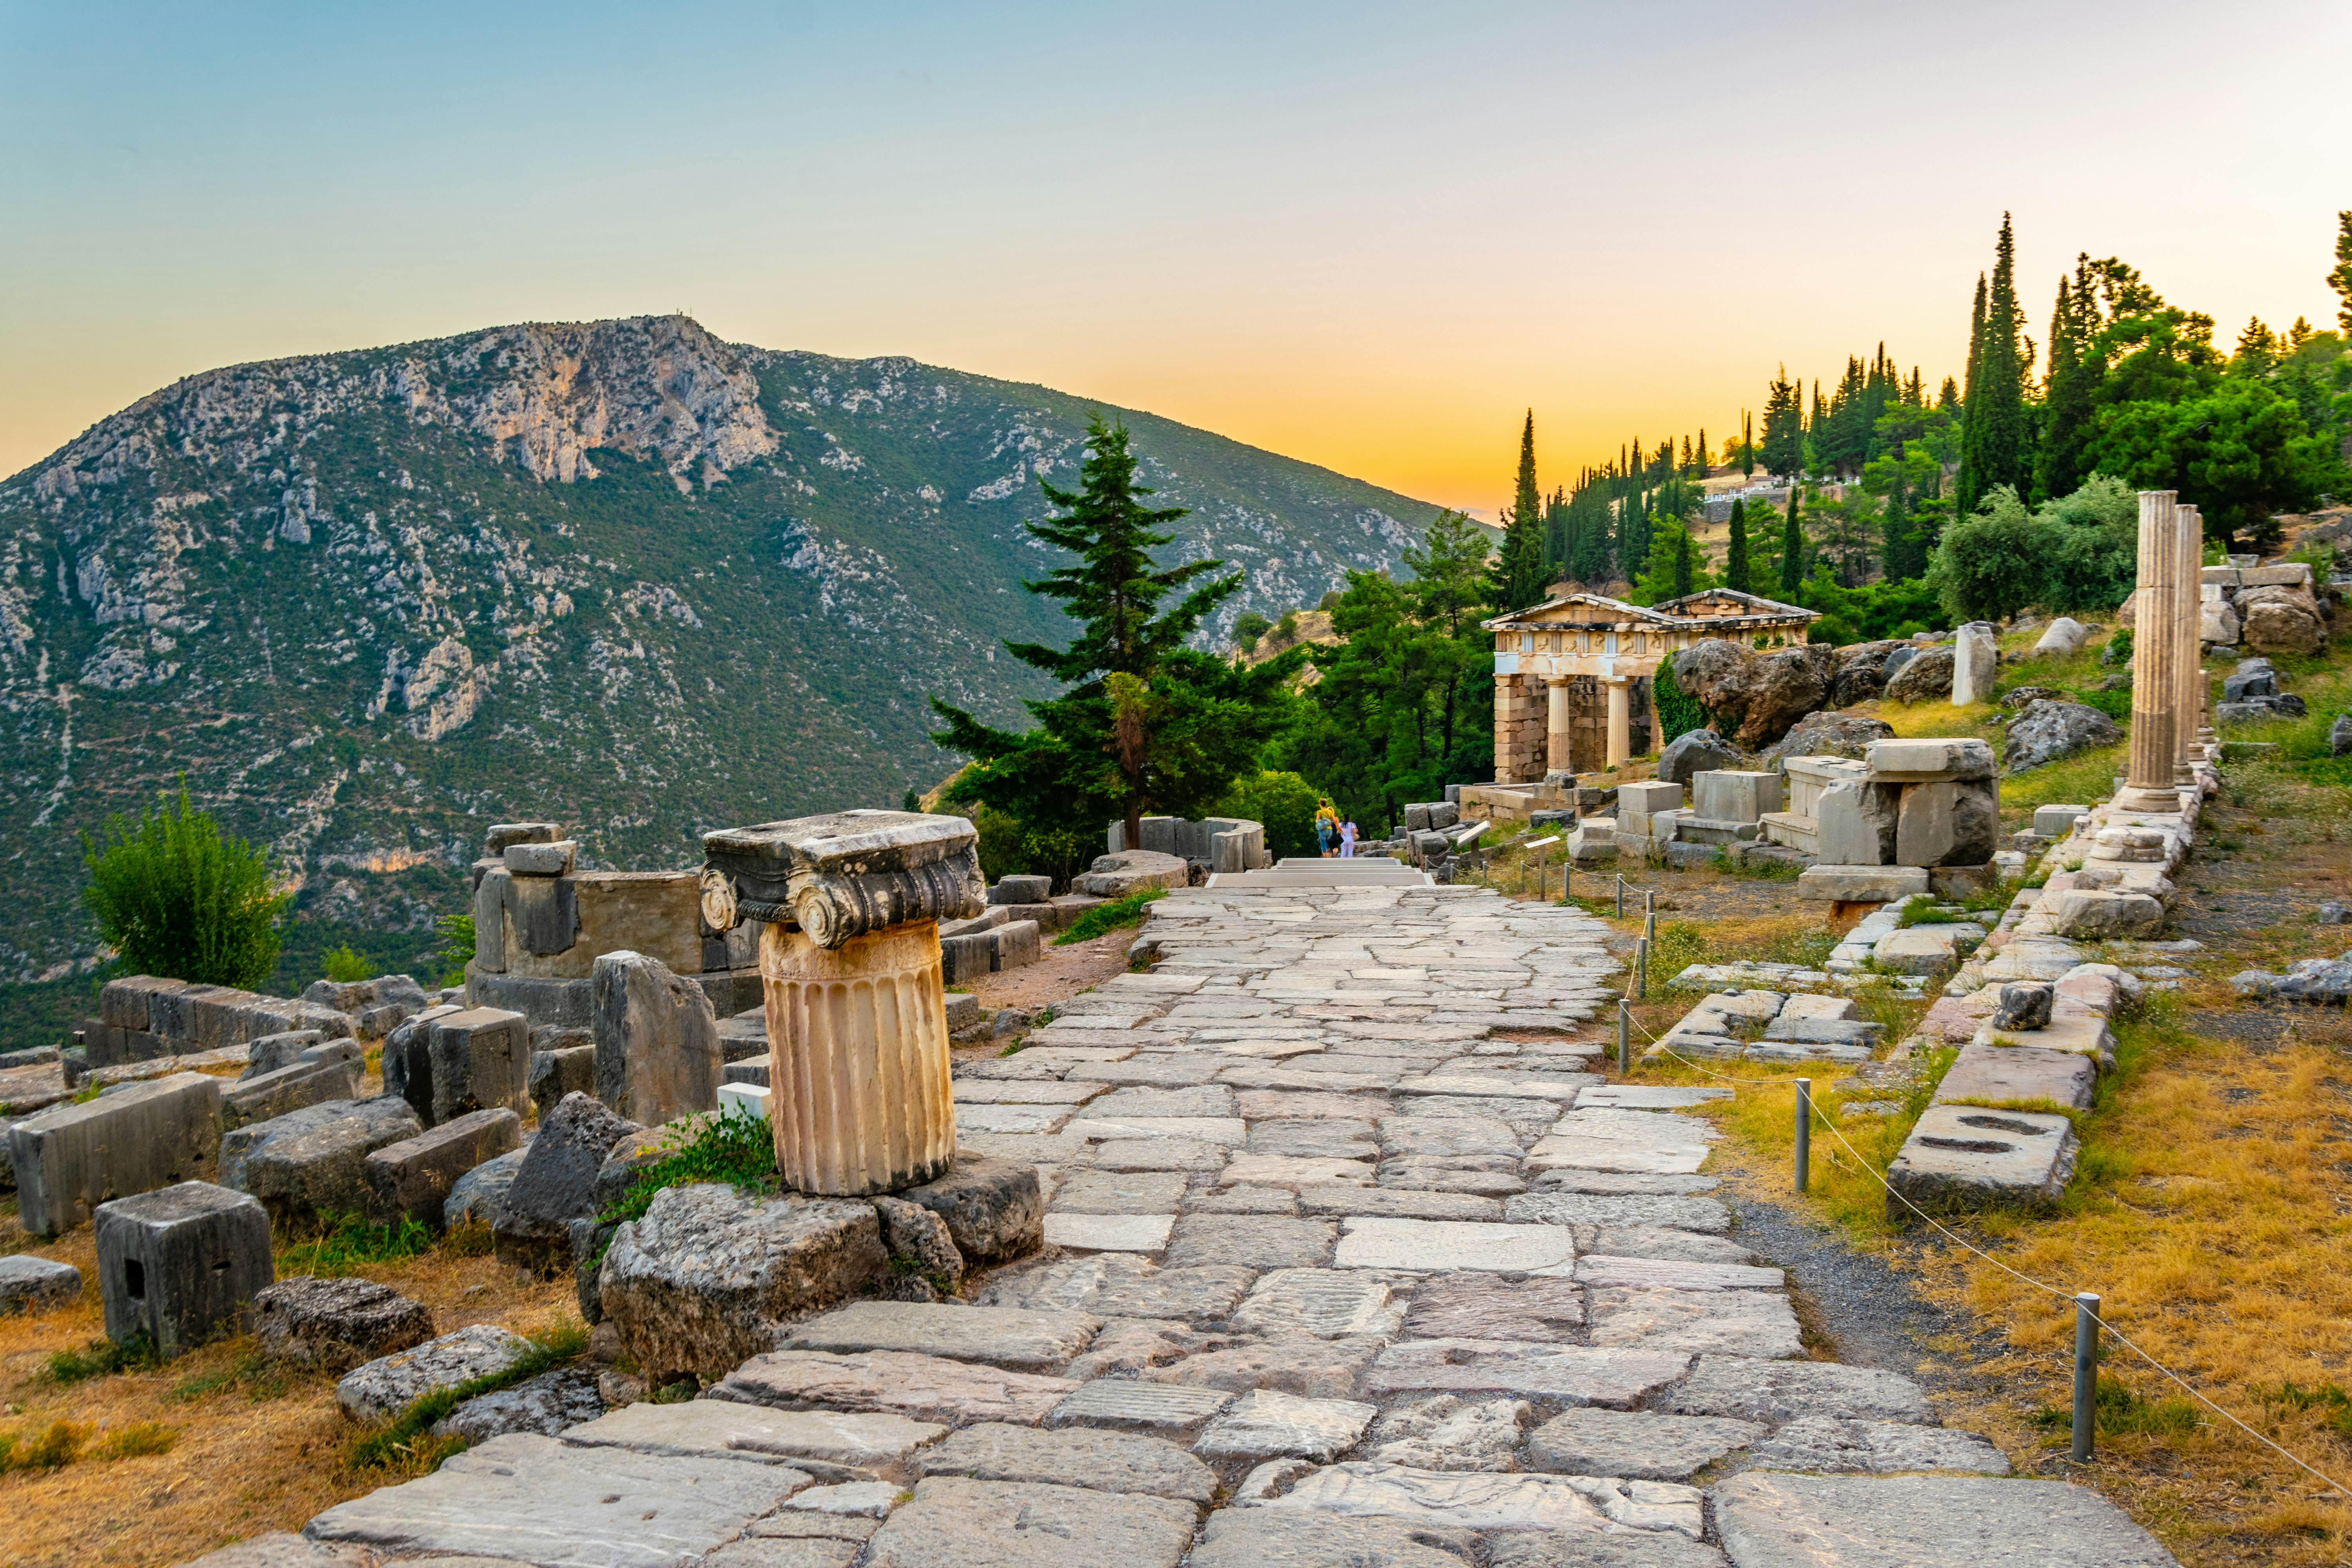 Exploring Delphi, the heart of ancient Greece